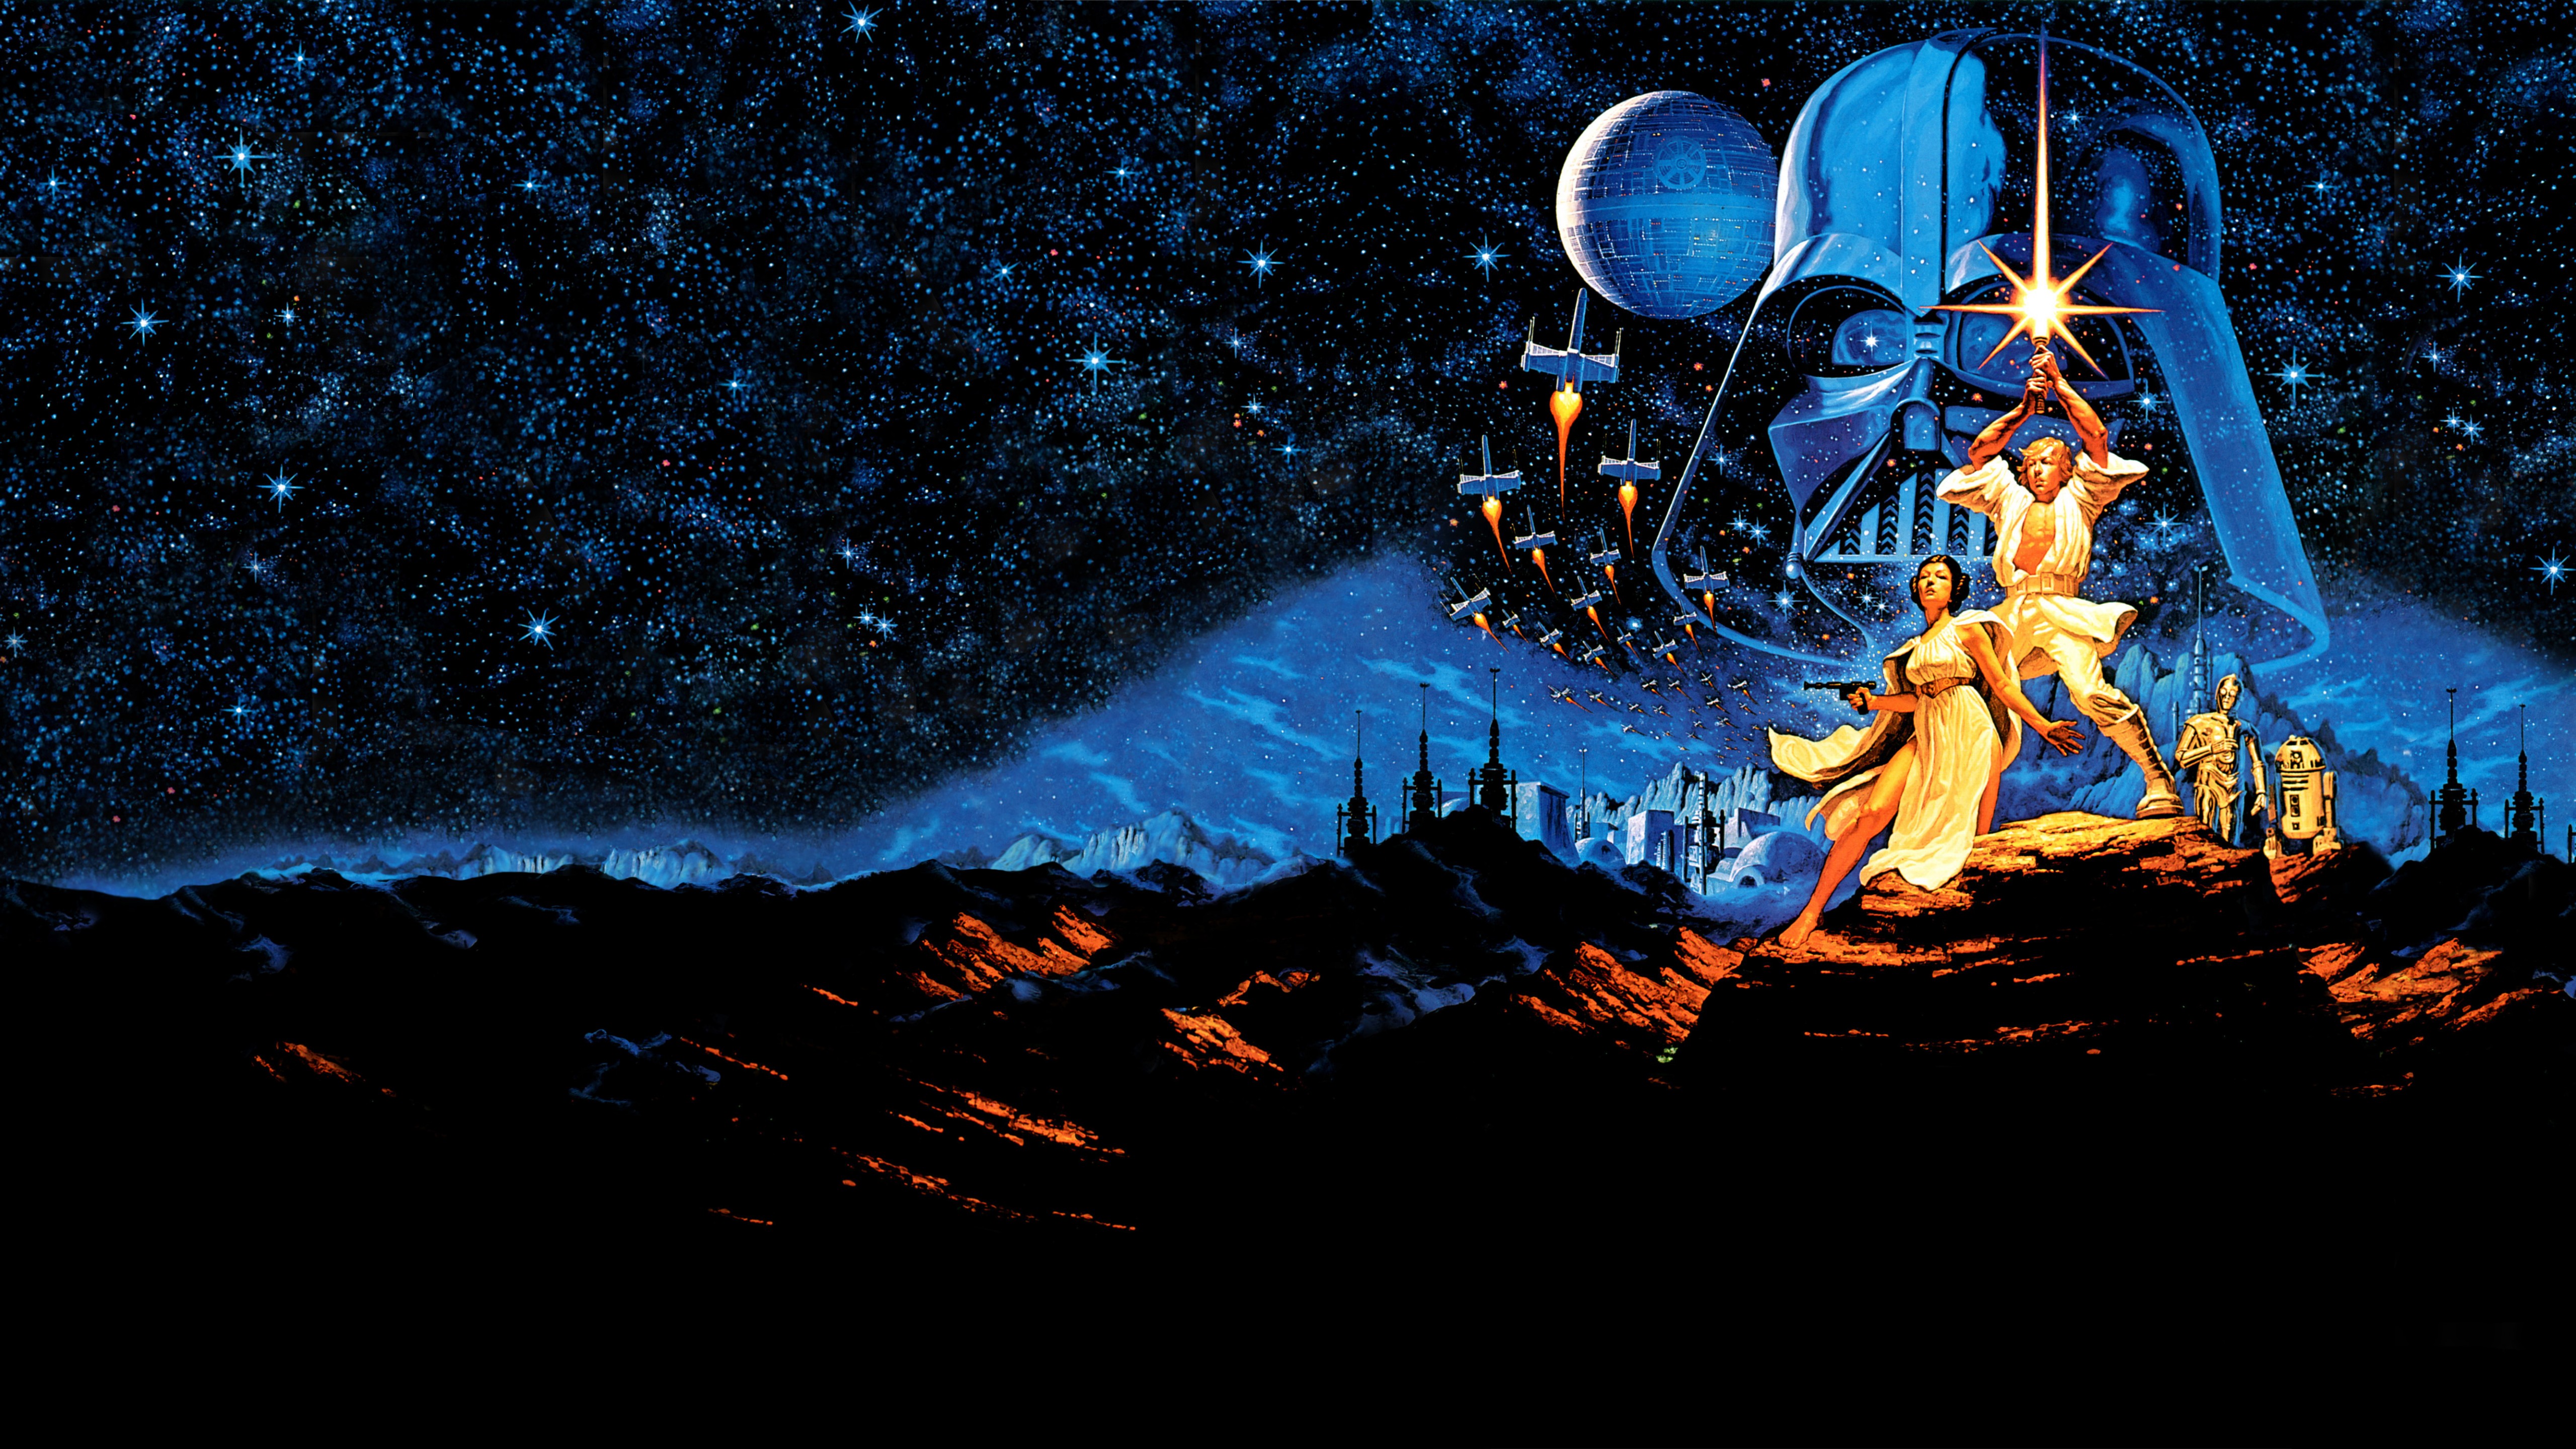 Darth Vader Princess Leia R2-D2 and Star Wars 4k Ultra HD Wallpaper ... Star Wars Star Background